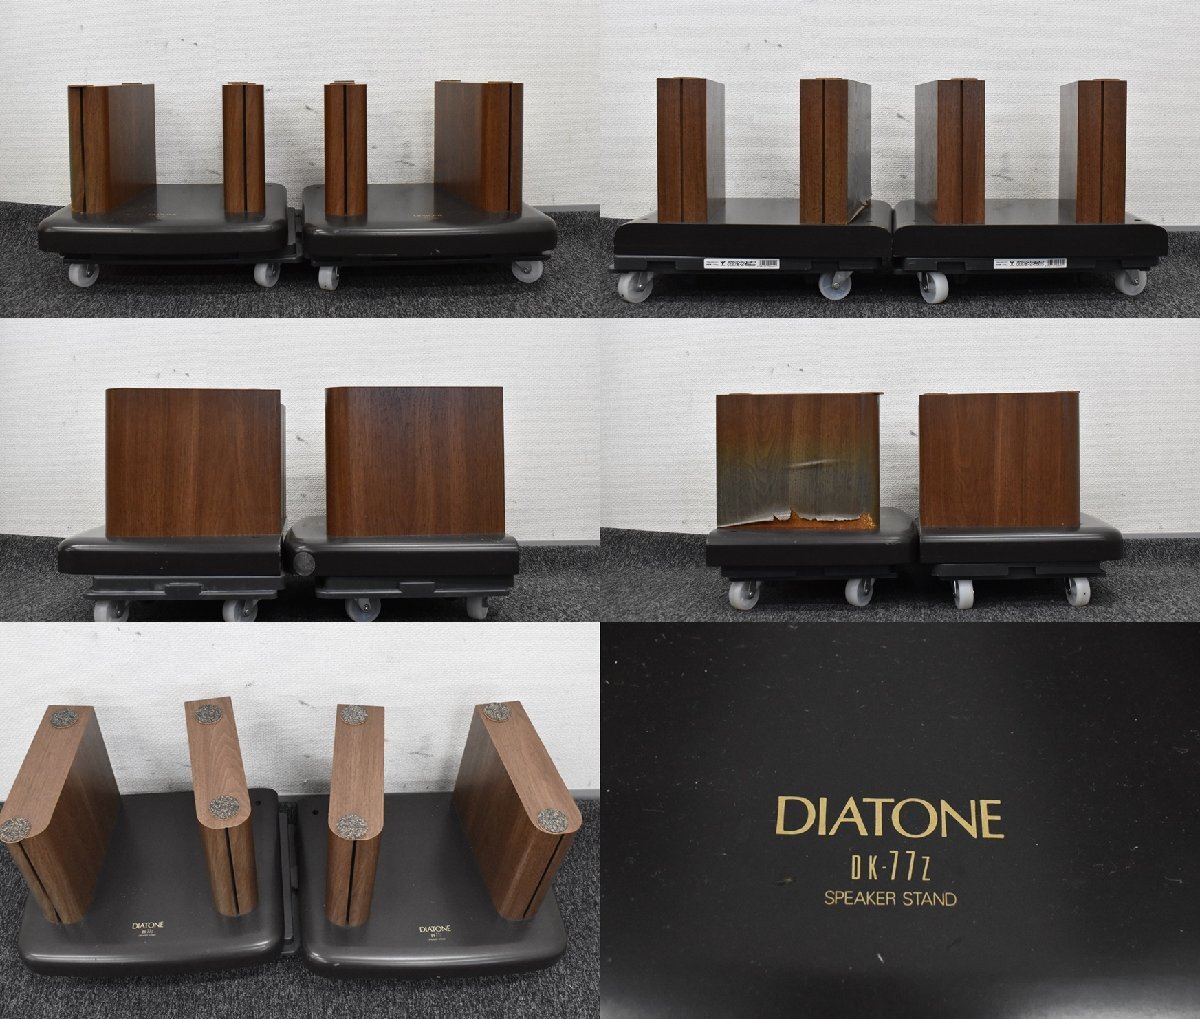 .3193 б/у товар DIATONE DS-77Z/DK-77Z Diatone динамик / подставка 3 выход отправка 